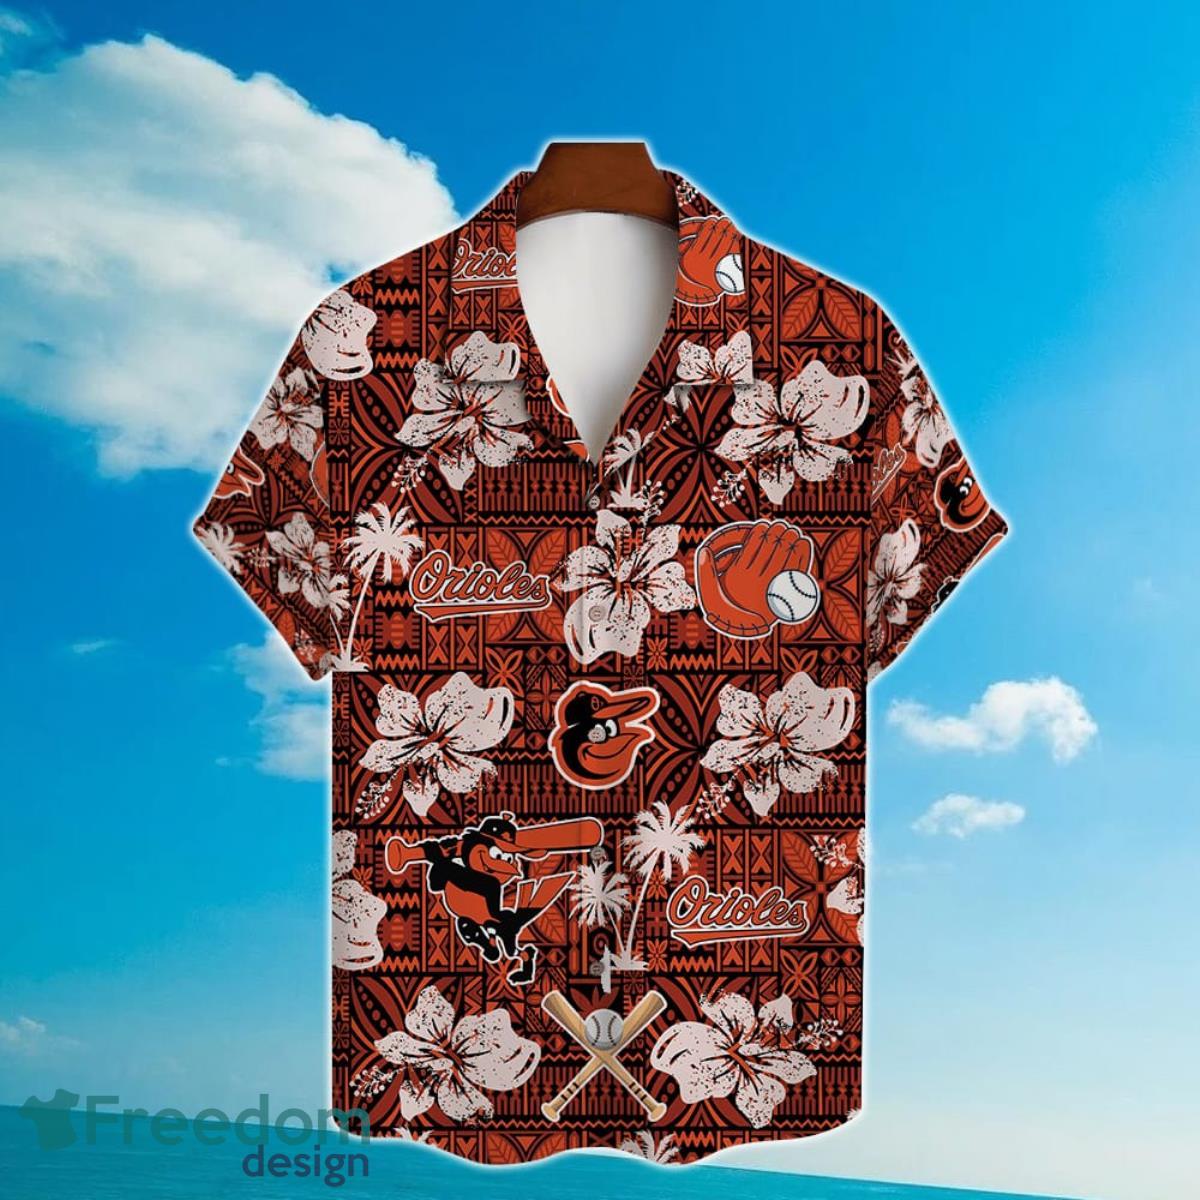 Baltimore Orioles Plaid Baseball Pattern Vintage Hawaiian Shirt